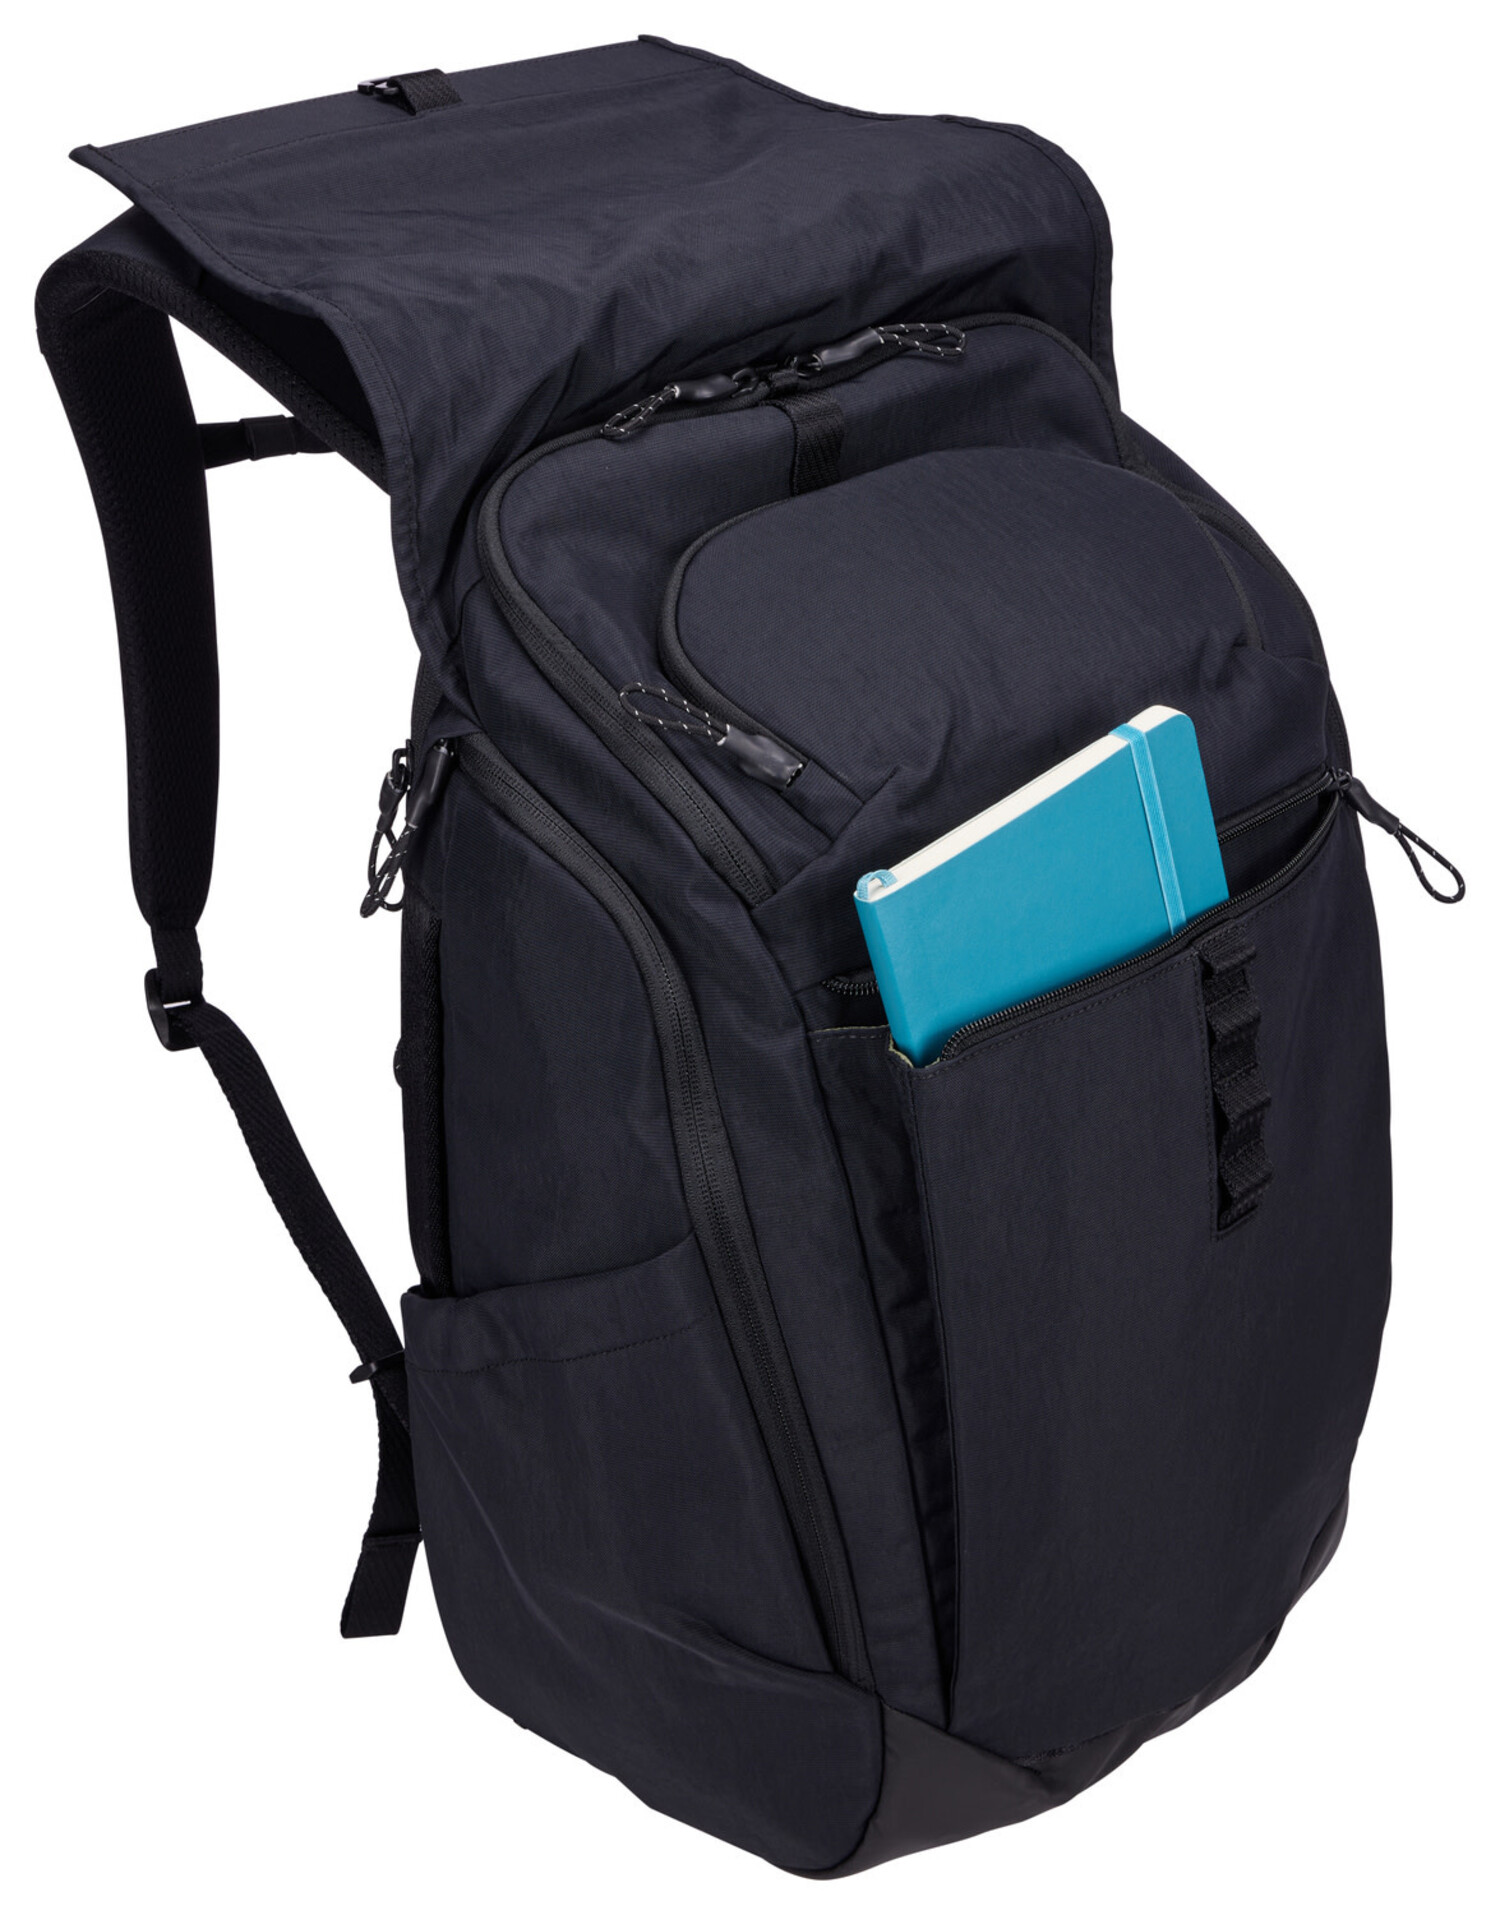 Thule Thule Paramount Laptop Backpack 27L Black- New